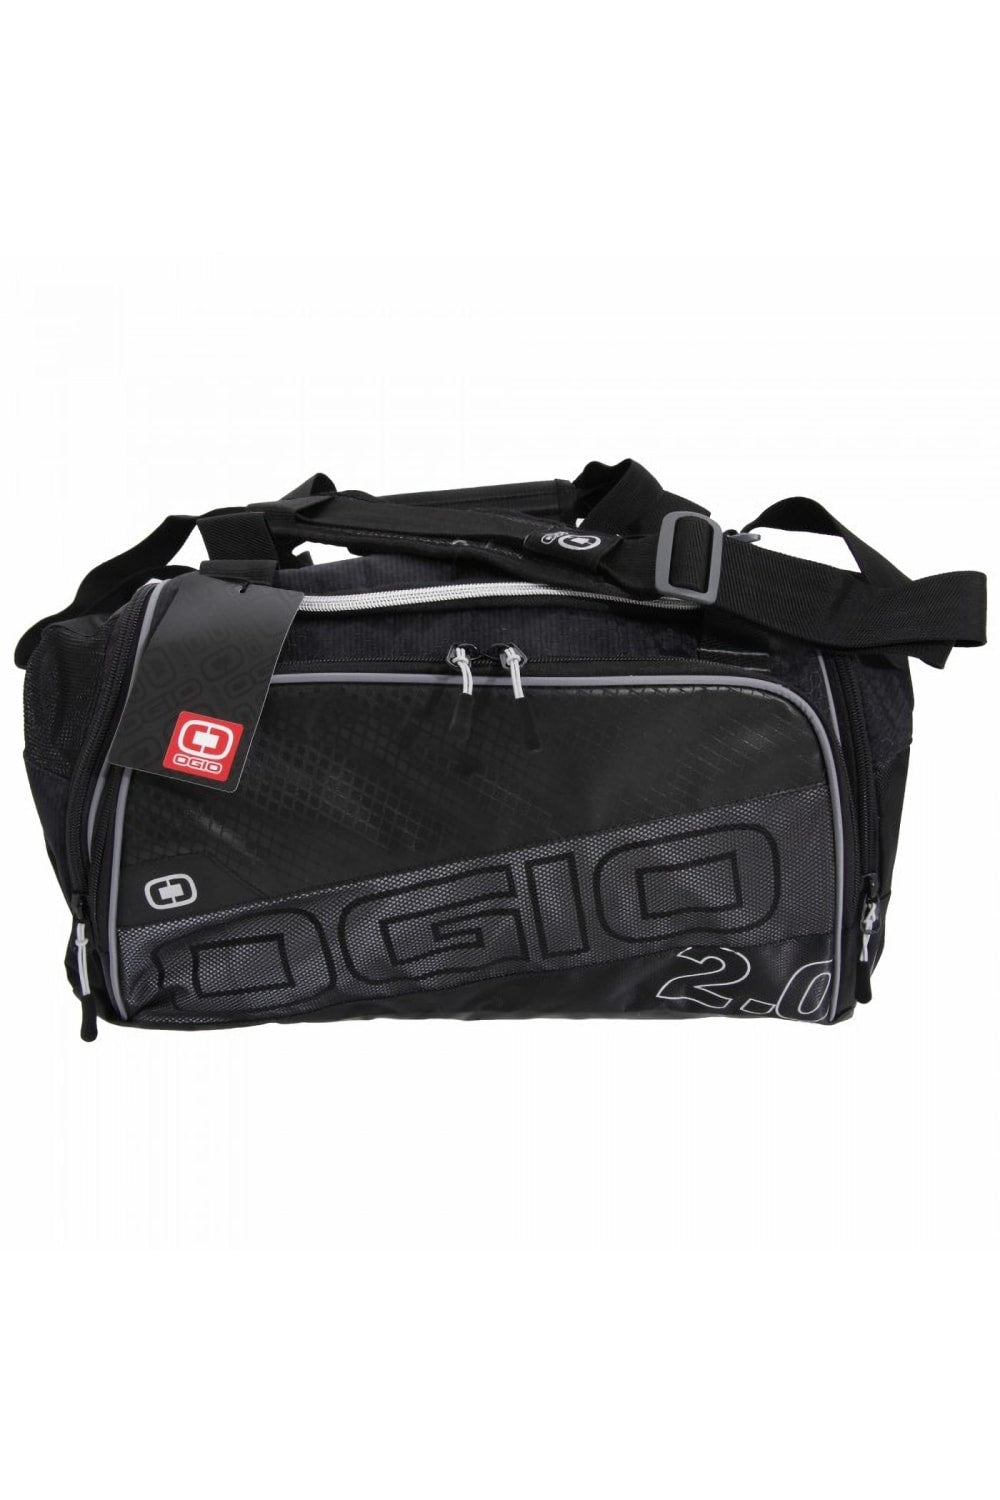 Ogio Endurance Sports 2.0 Duffel Bag (38 Liters) (Pack of 2) (Black) (One Size)